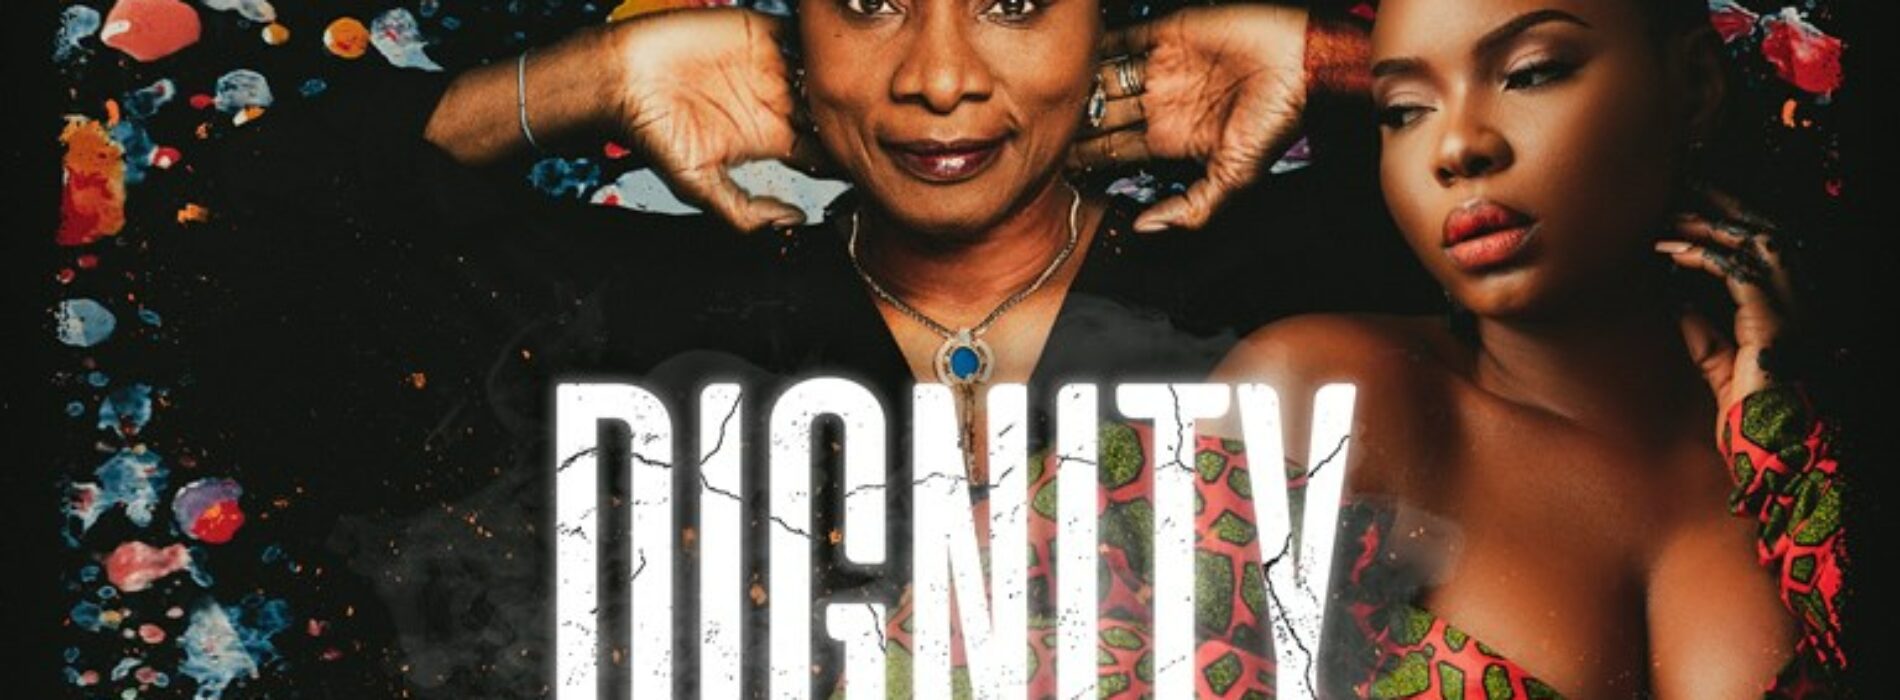 Angelique Kidjo – Dignity  ft. Yemi Alade (clip officiel) – Avril 2021